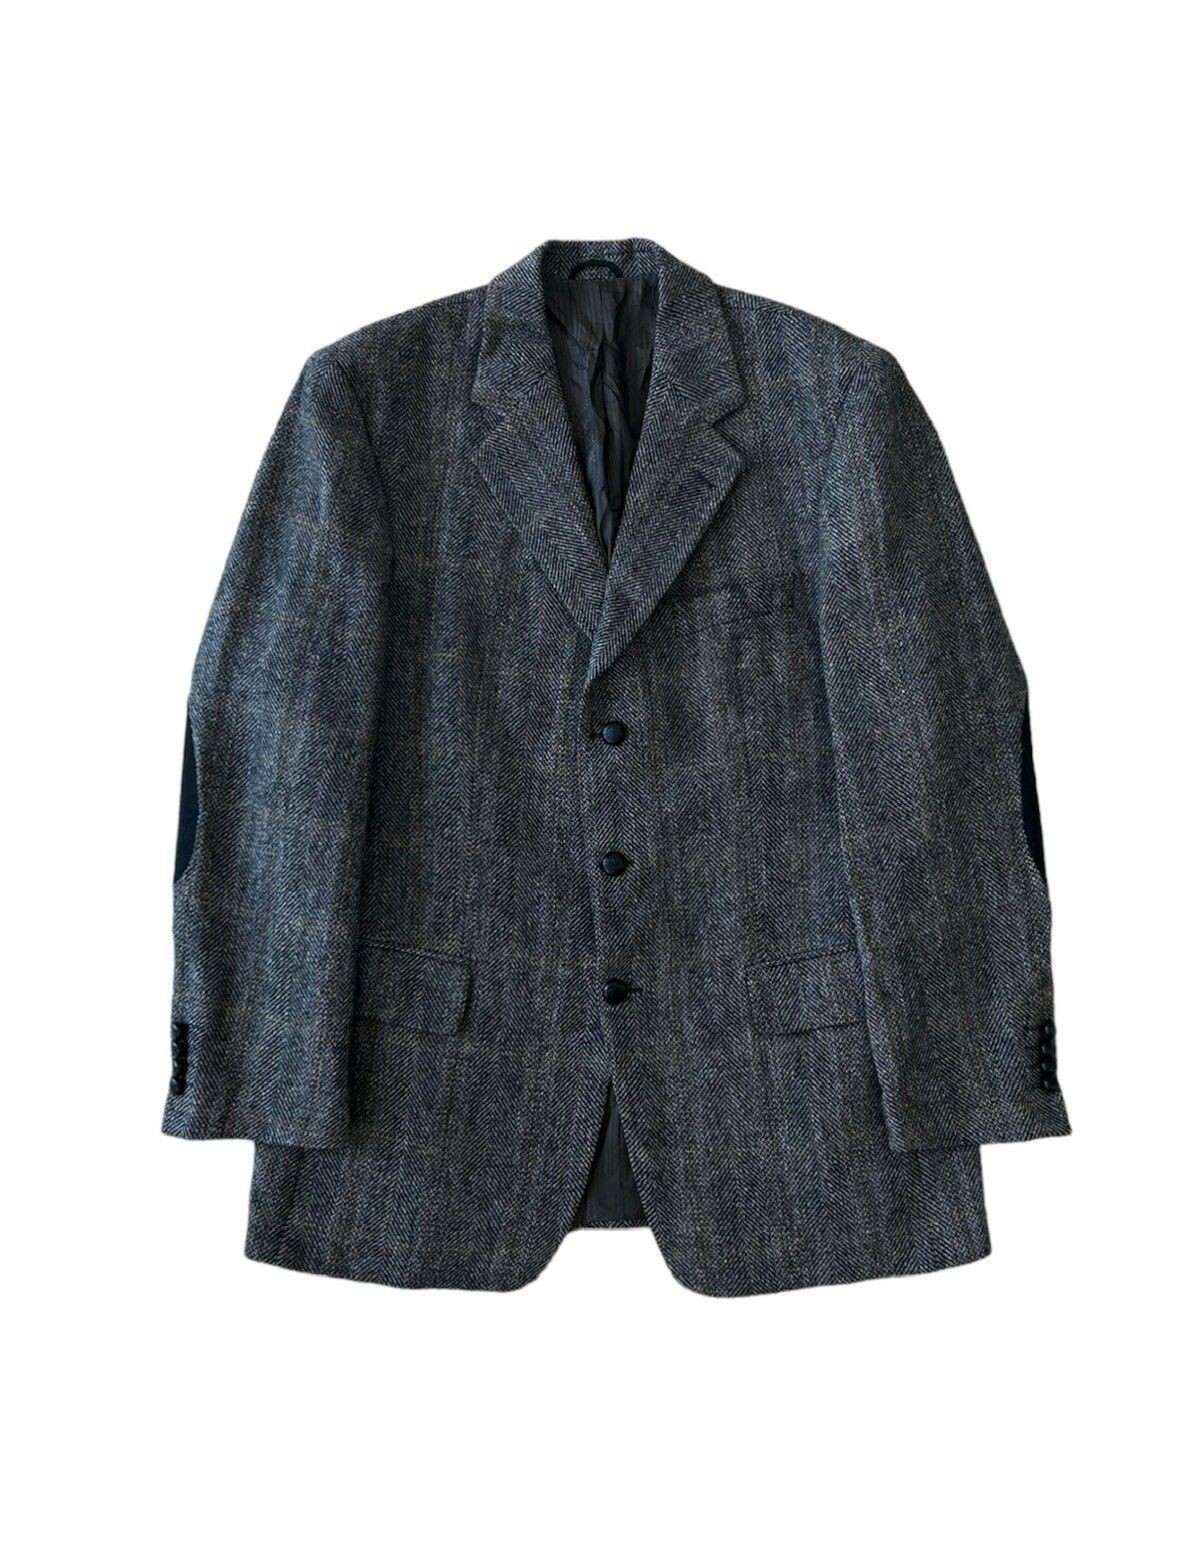 Harris Tweed Harris Tweed & Mario Barutti handwoven wool blazer | Grailed